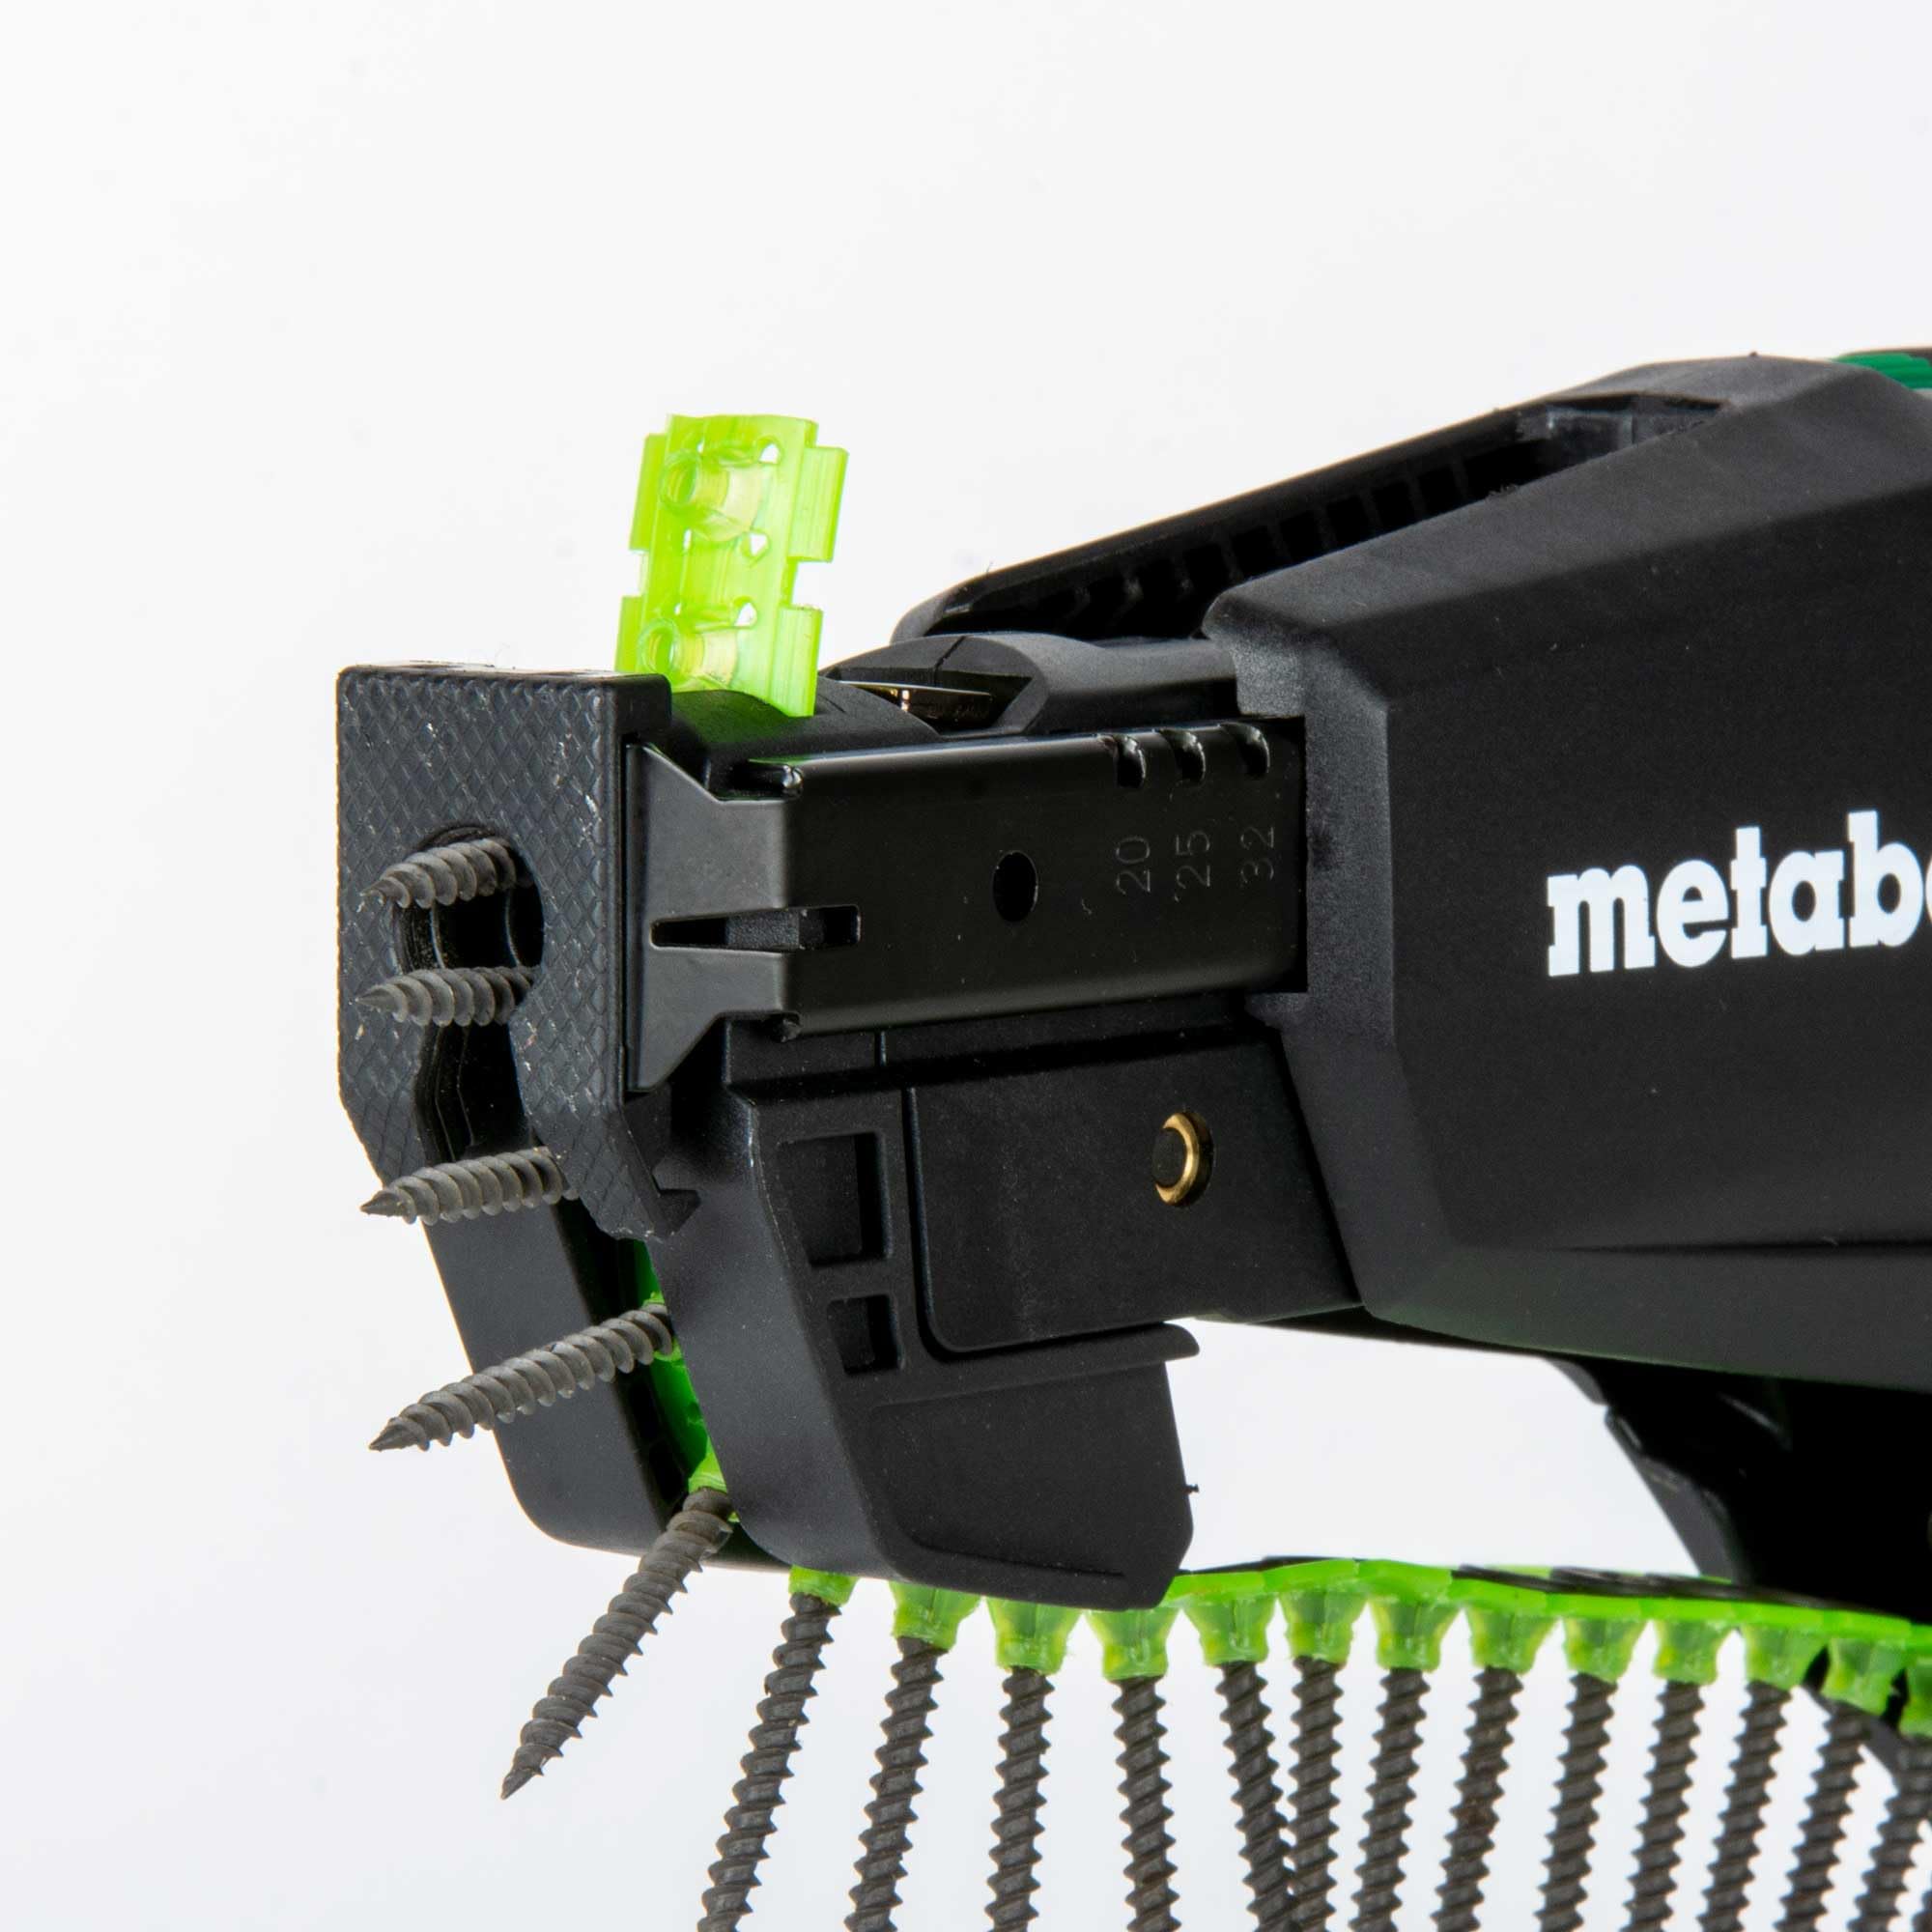 Metabo HPT Cordless 18V MultiVolt™ Drywall Screw Gun Kit | Includes Collated Screw Magazine Attachment | Includes 1-18V 2.0 Ah Battery | Lifetime Tool Warranty | W18DAQB